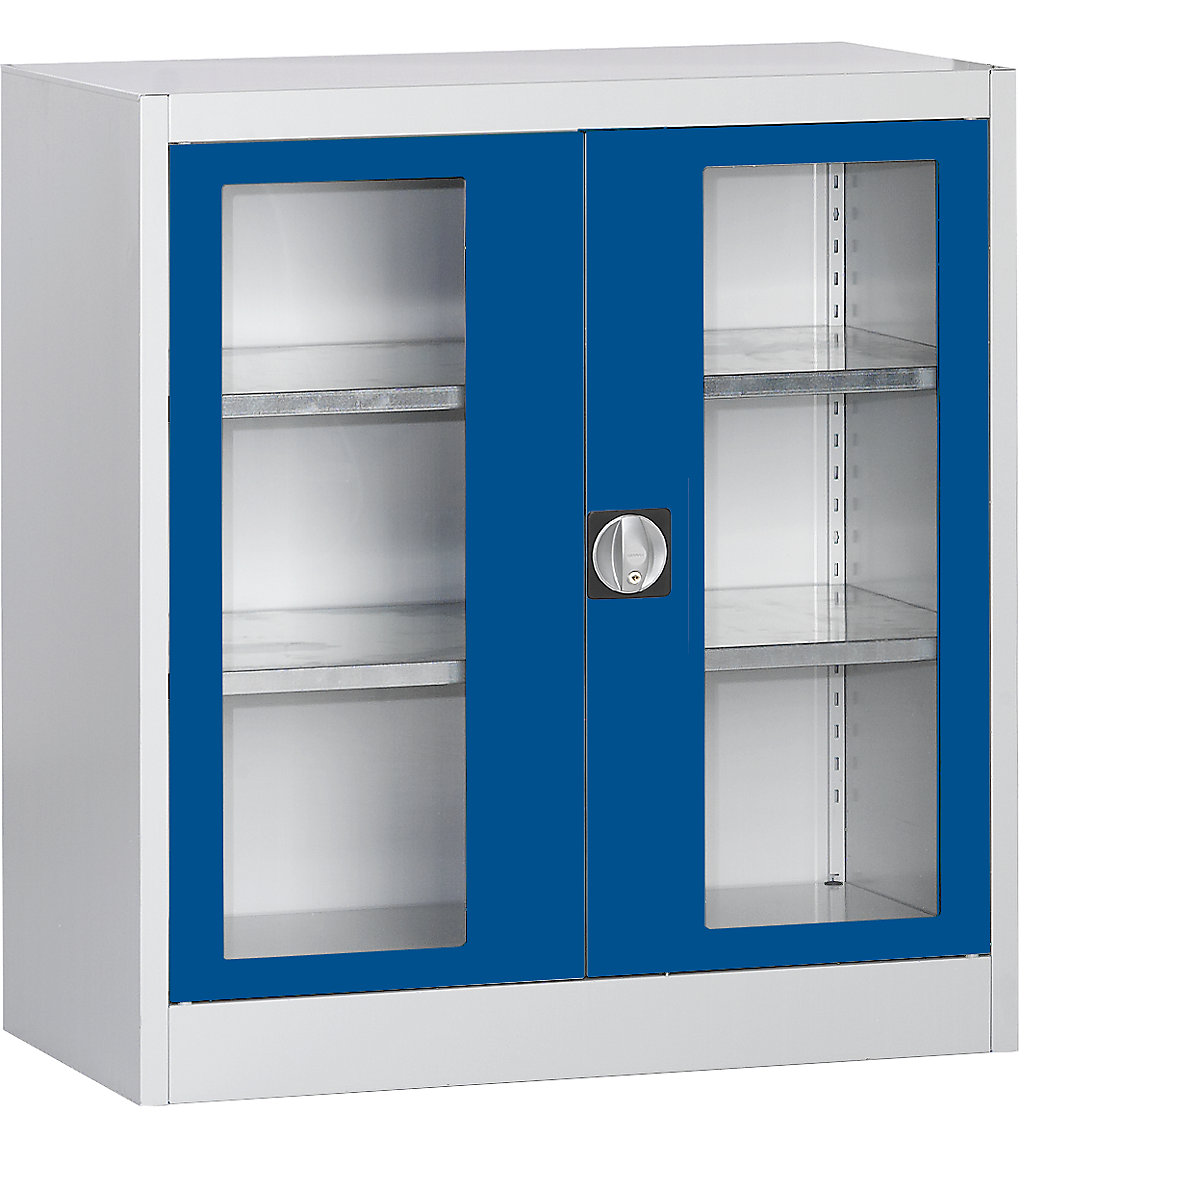 Skříň s otočnými dveřmi a okénkem – mauser, se 2 policemi, v x š x h 1016 x 950 x 500 mm, světlá šedá/enciánová modrá-5